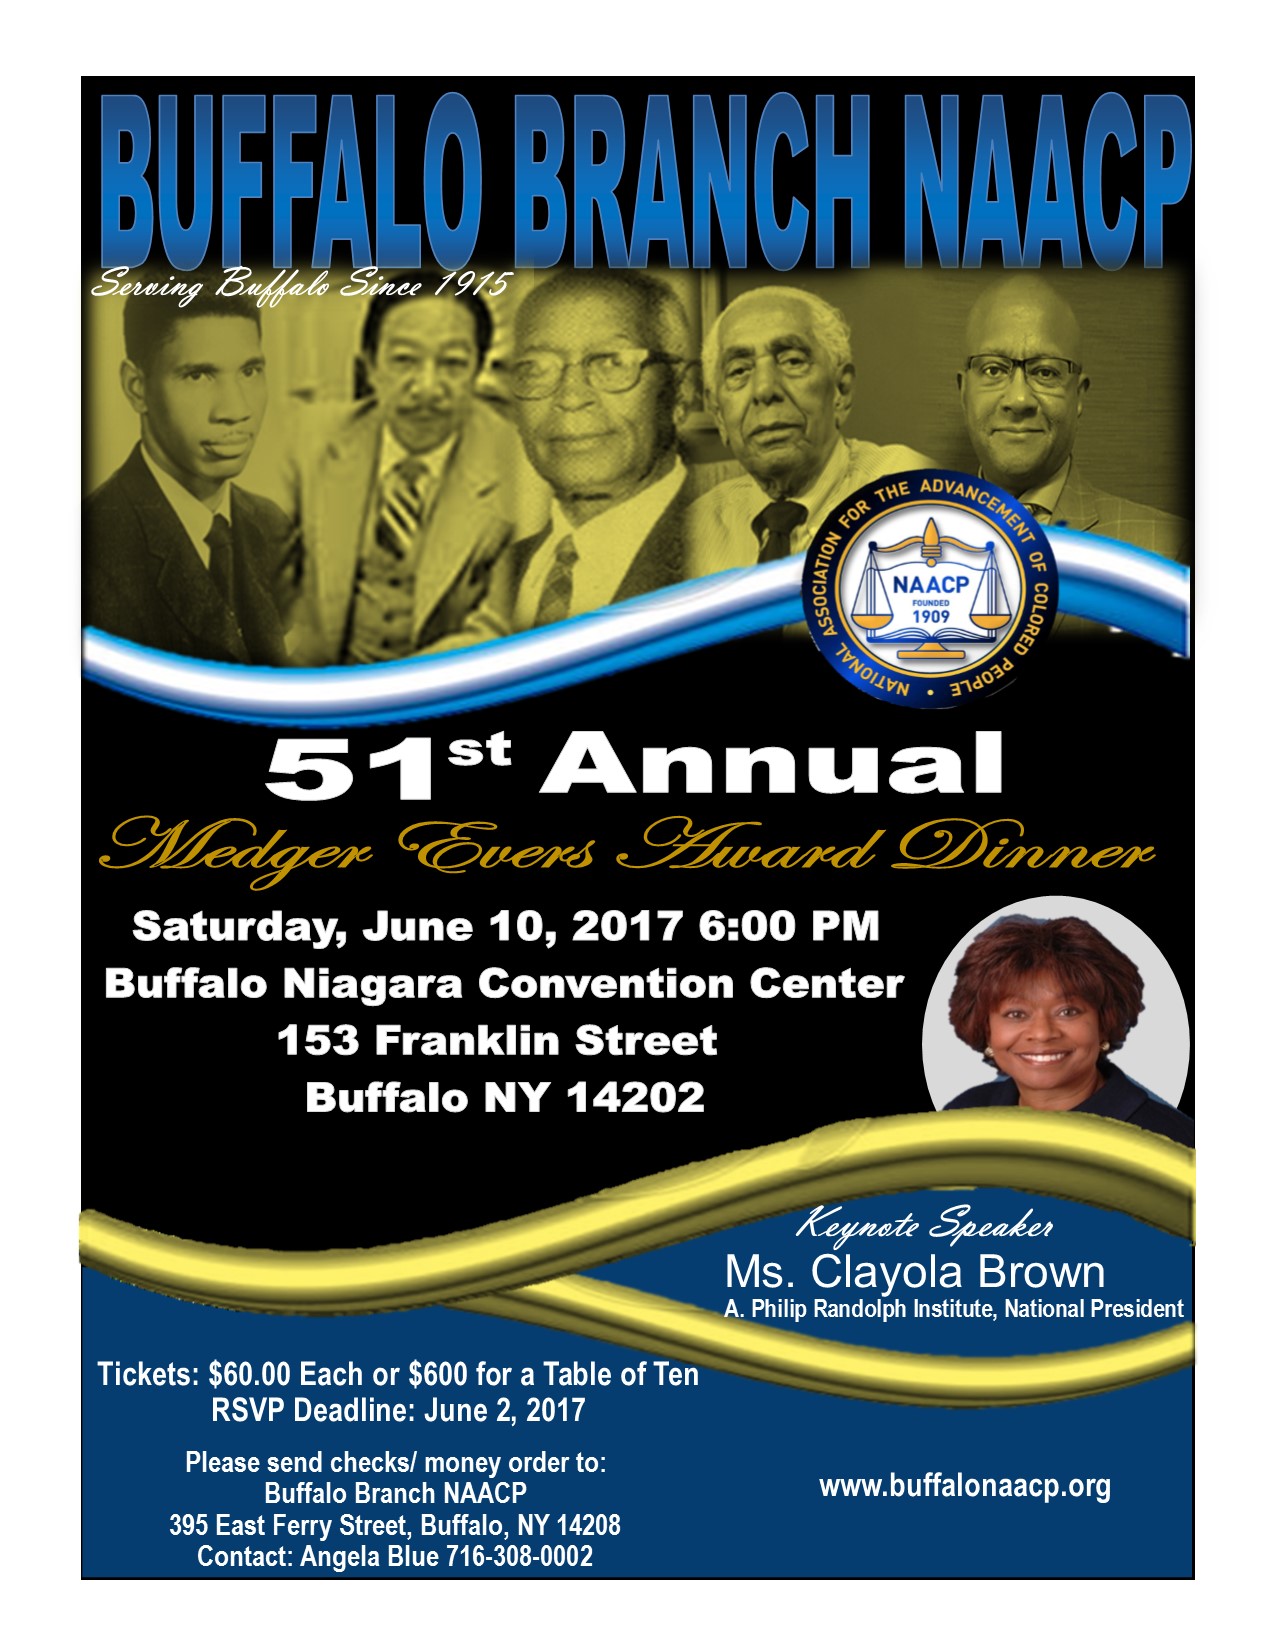 NAACP dinner poster Buffalo Branch NAACP